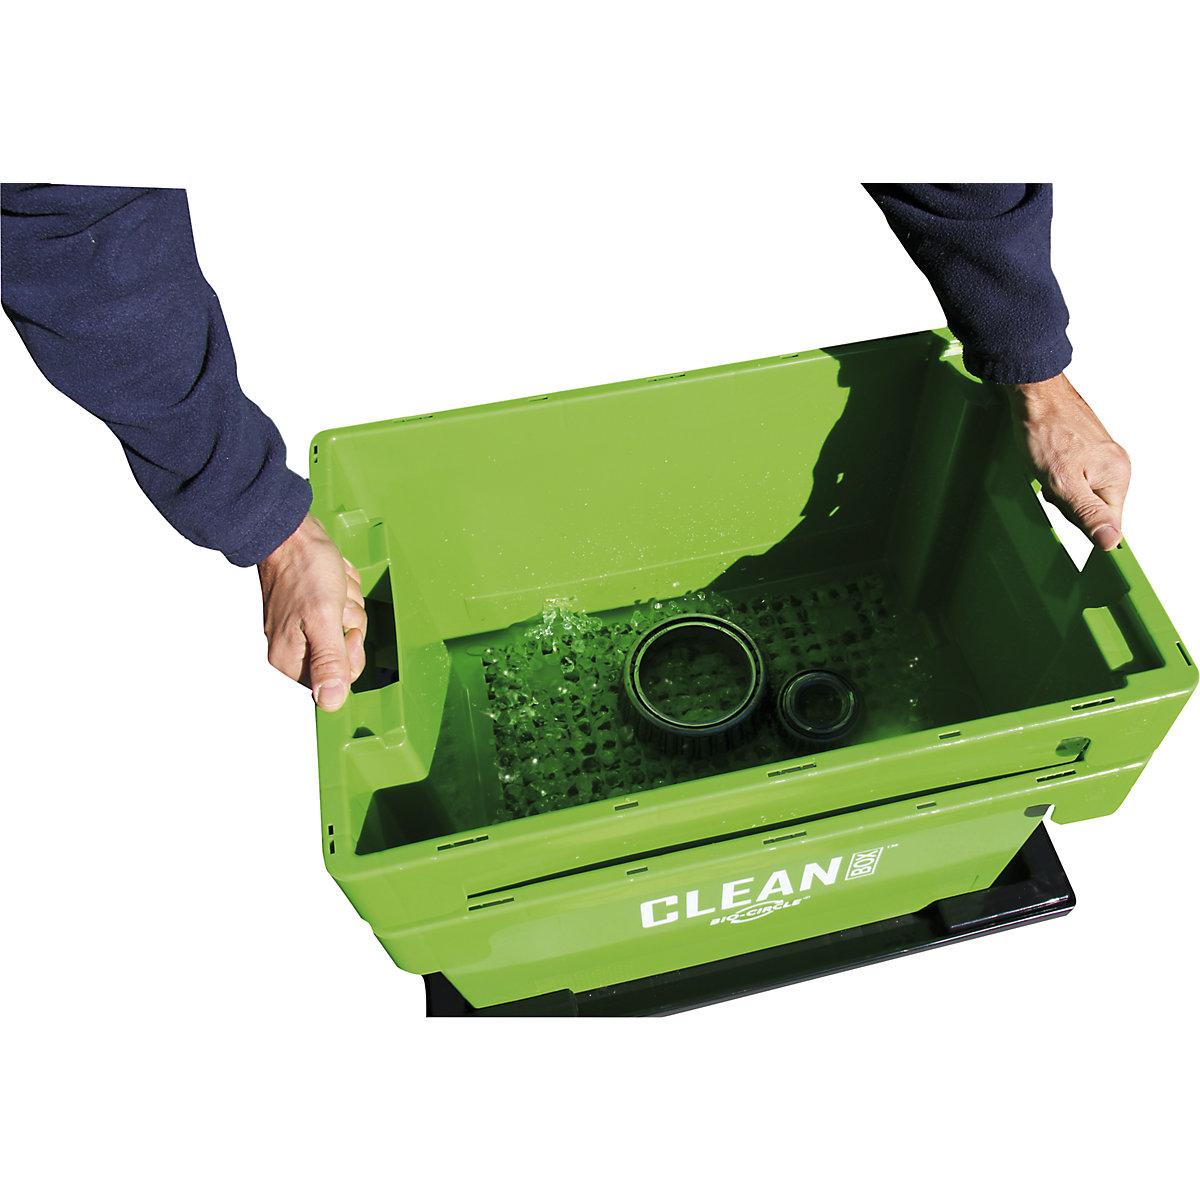 Onderdelenreiniger CLEAN BOX – Bio-Circle (Productafbeelding 2)-1